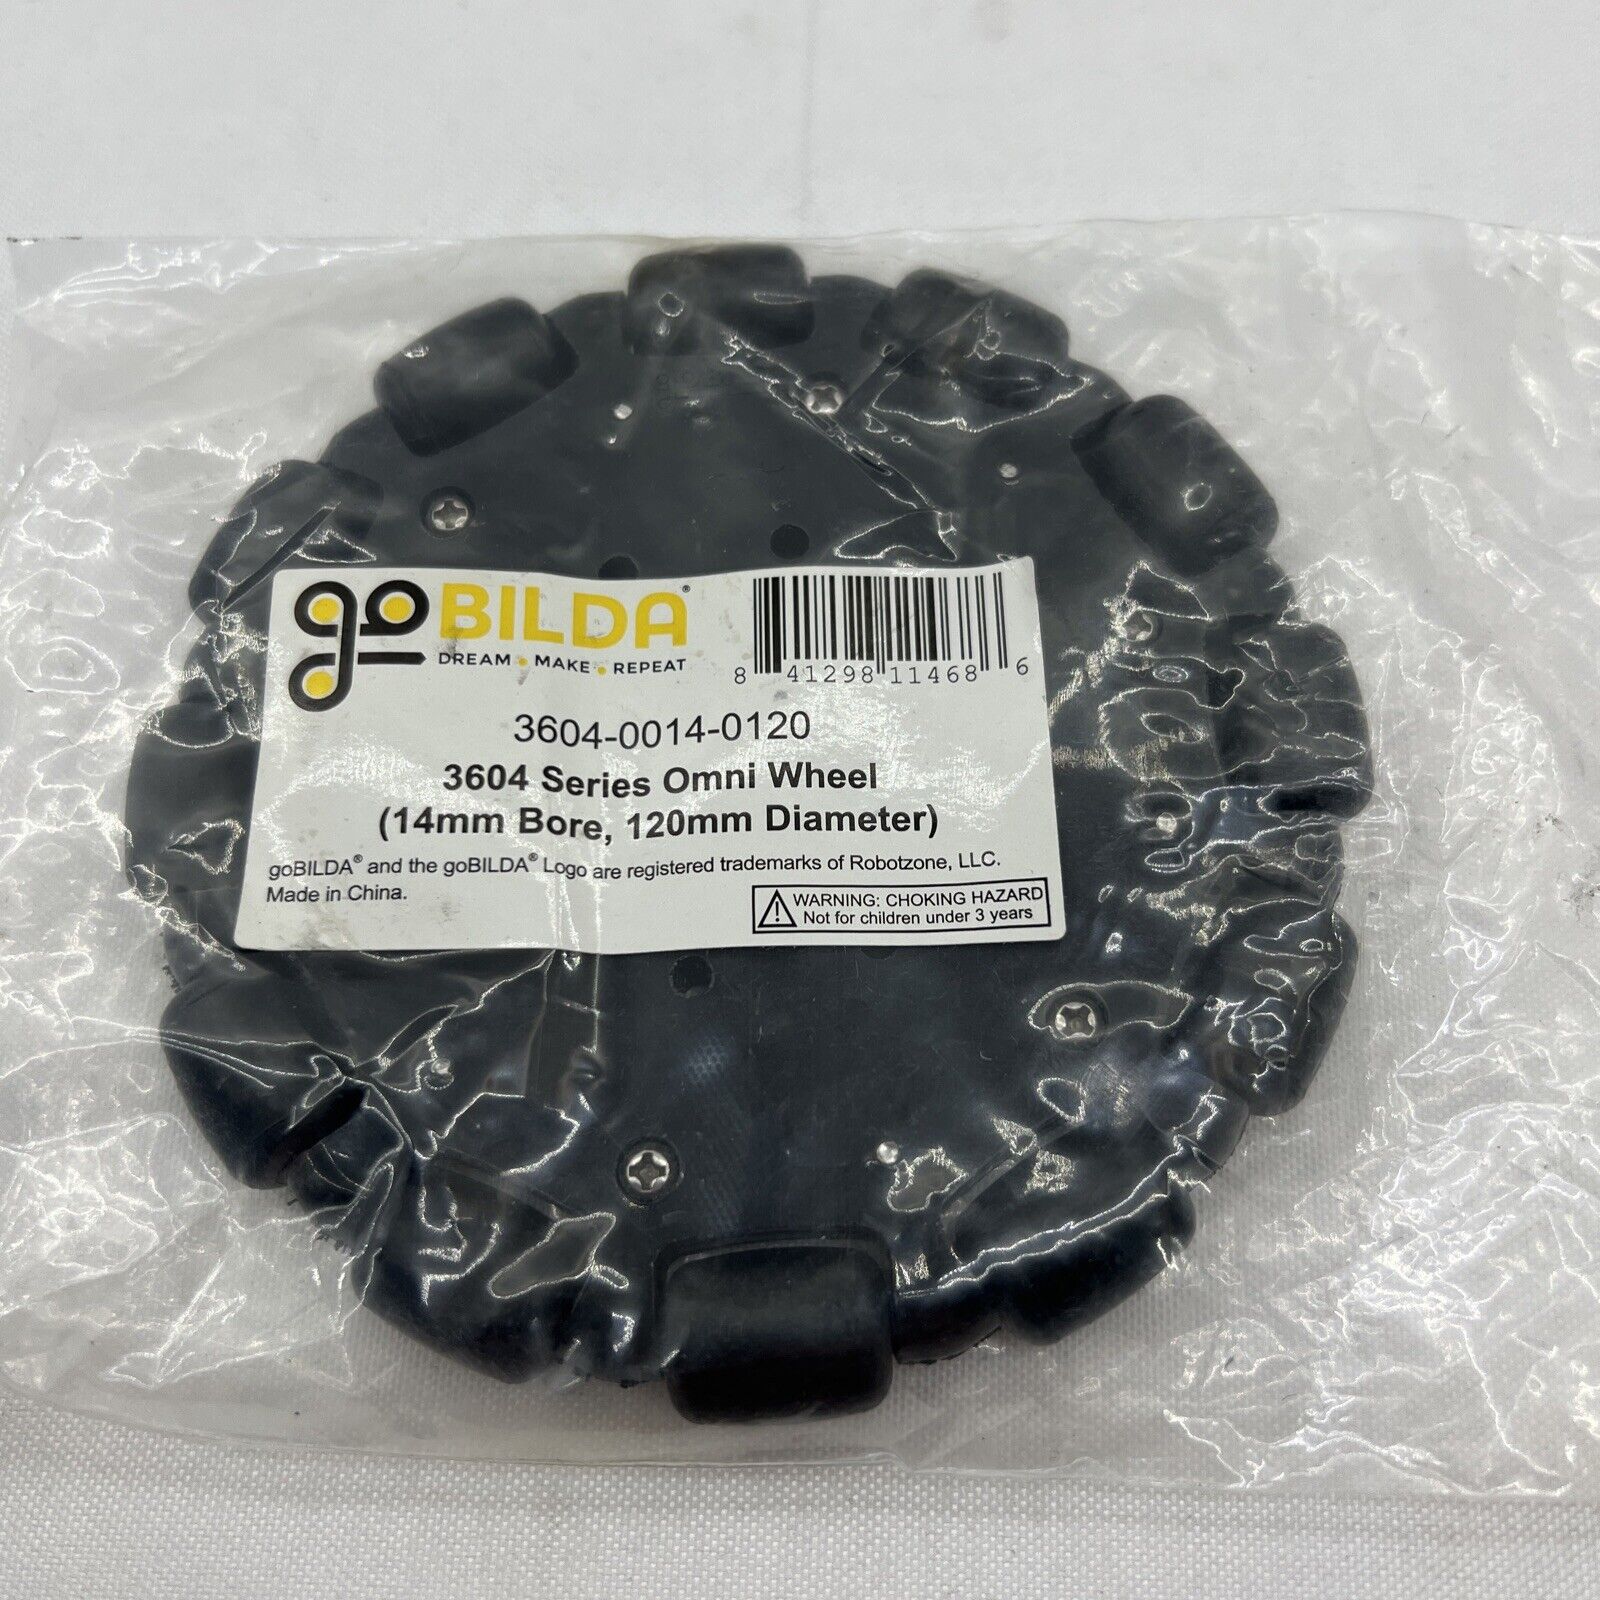 go BILDA 3604 Series Omni Wheel (14mm Bore, 120mm Diameter)